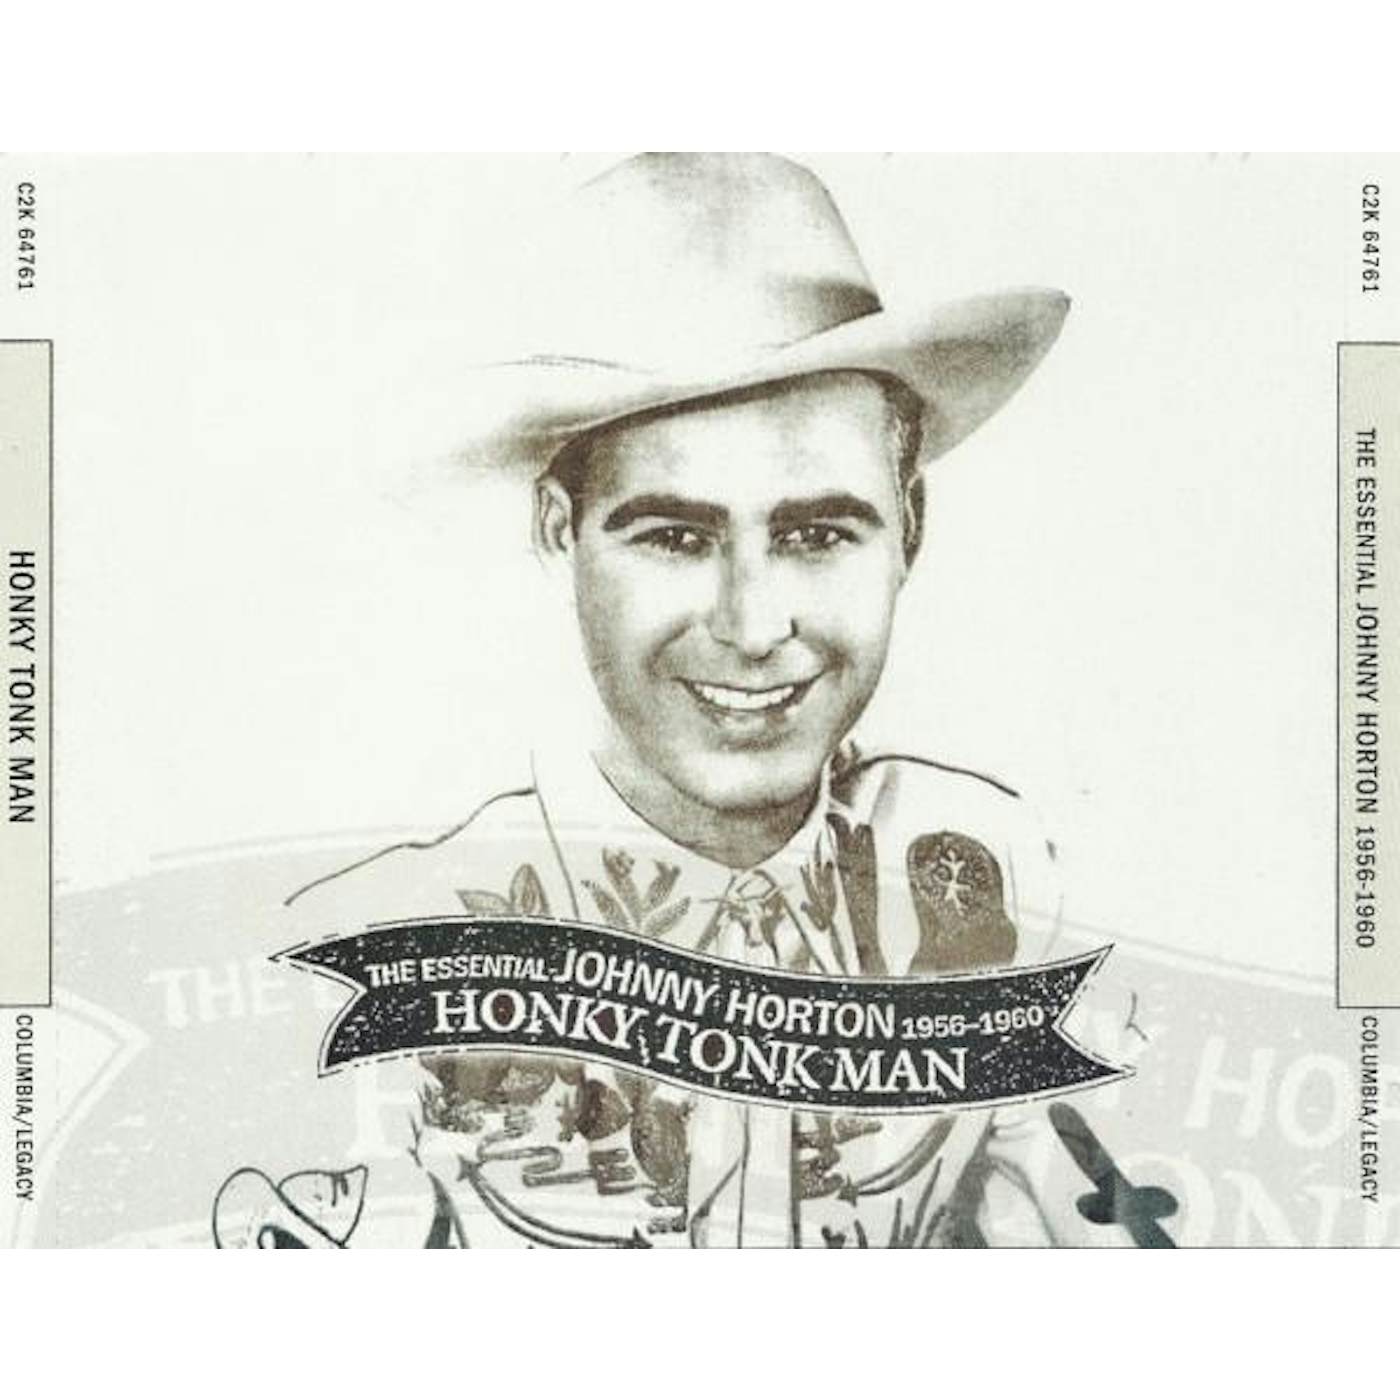 HONKY TONK MAN: ESSENTIAL JOHNNY HORTON 1956-1960 CD